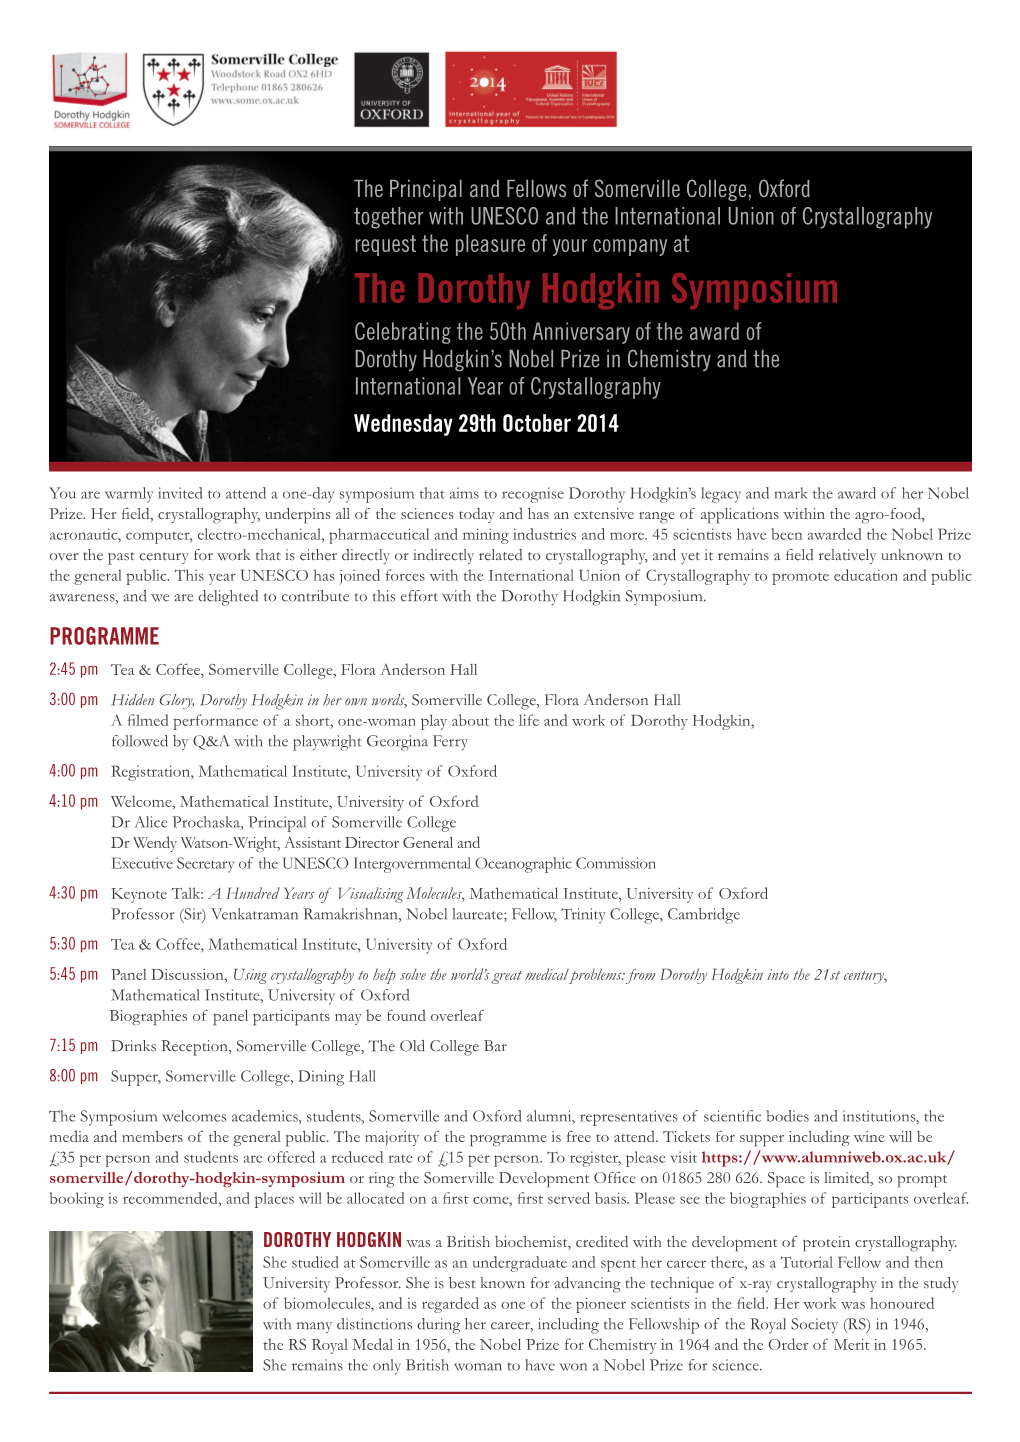 The Dorothy Hodgkin Symposium